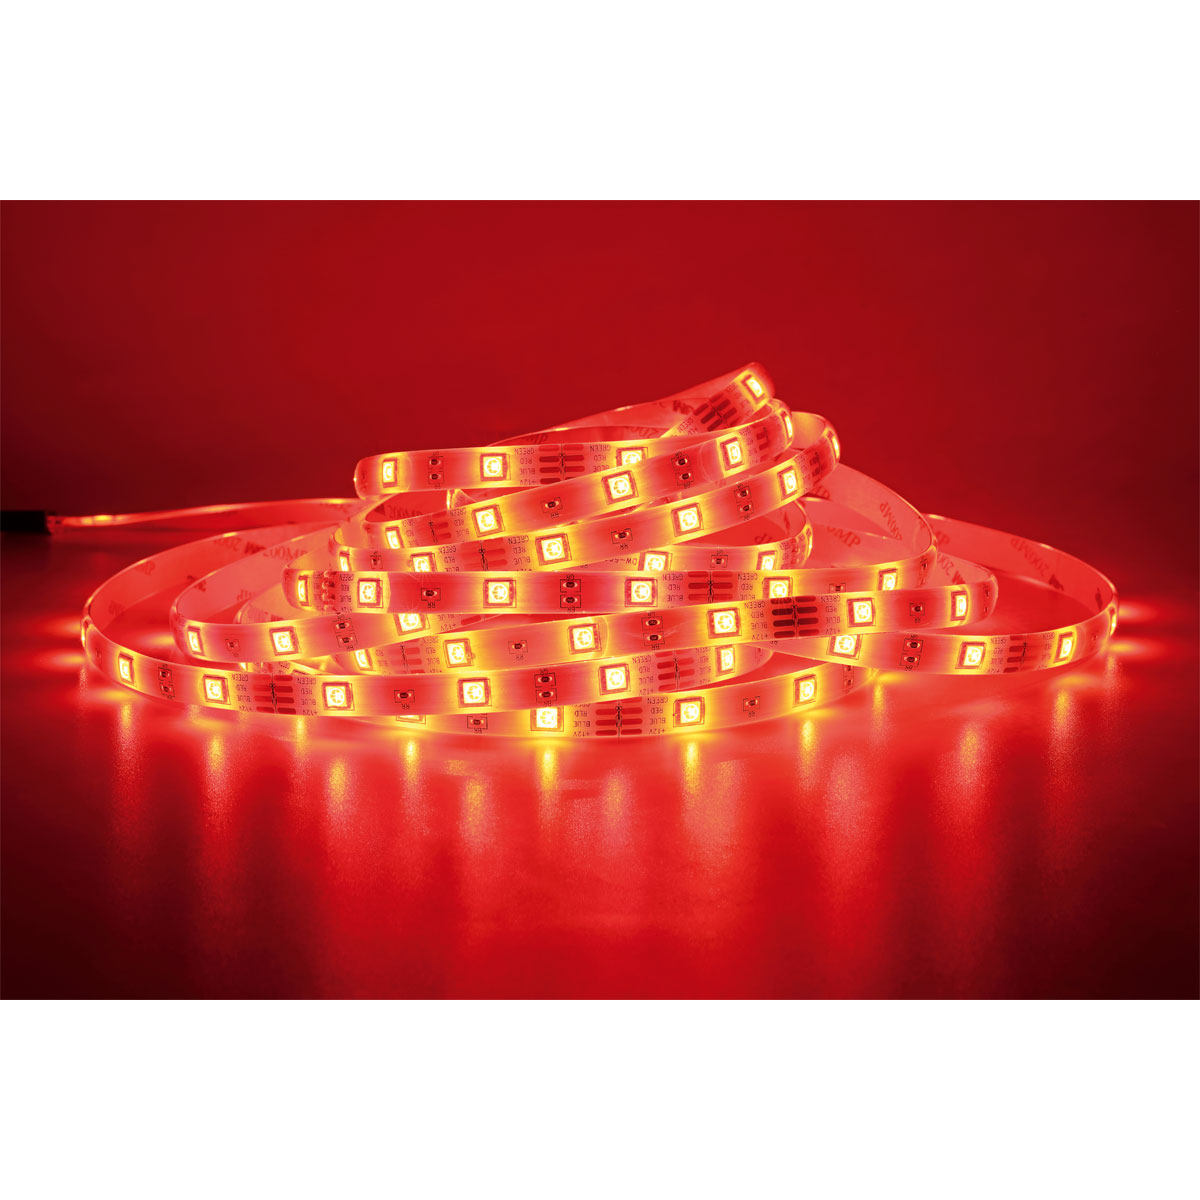 Flector LED-Lichtband RGB mit m 221378 Musiksensor 5 